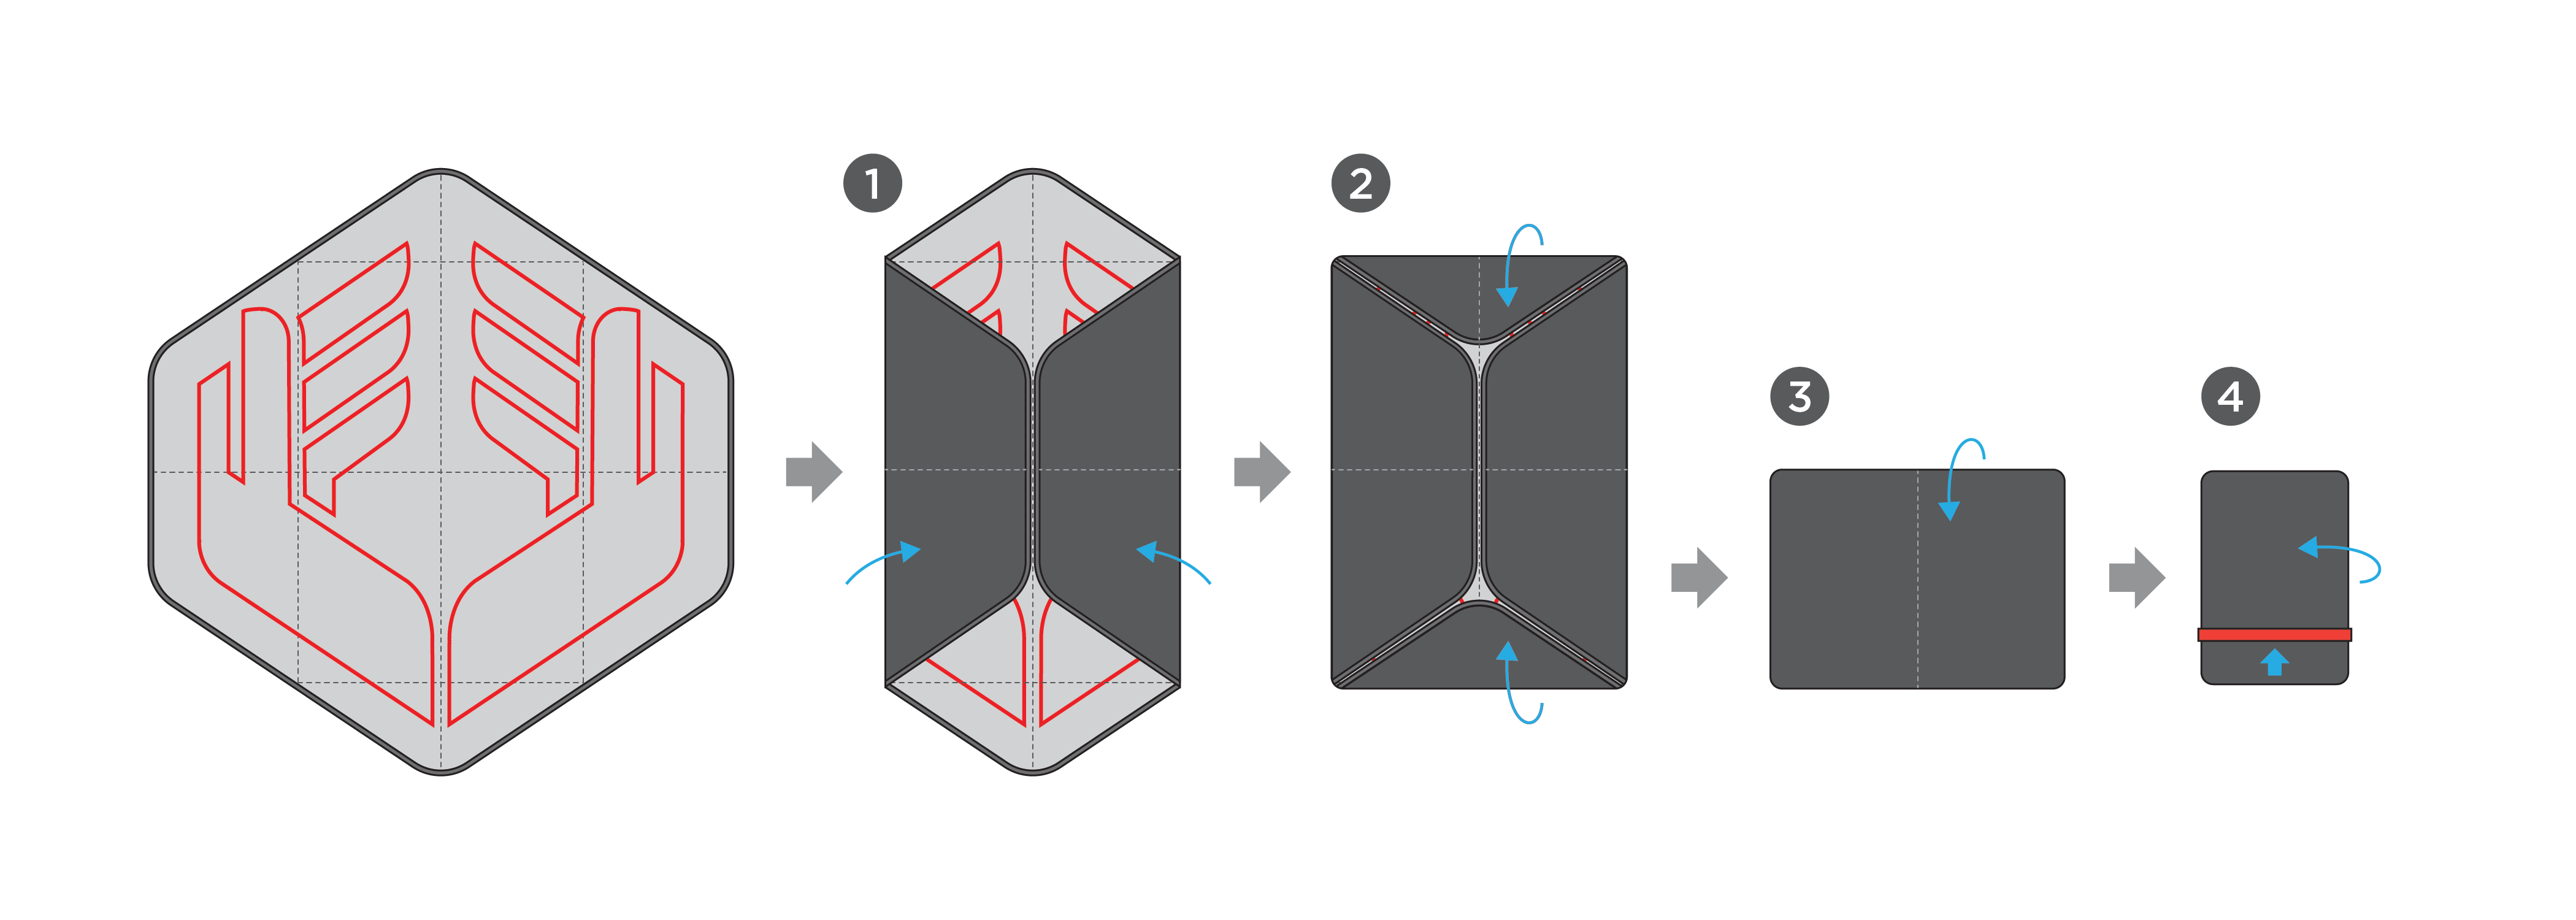 Folding Instruction (without text)